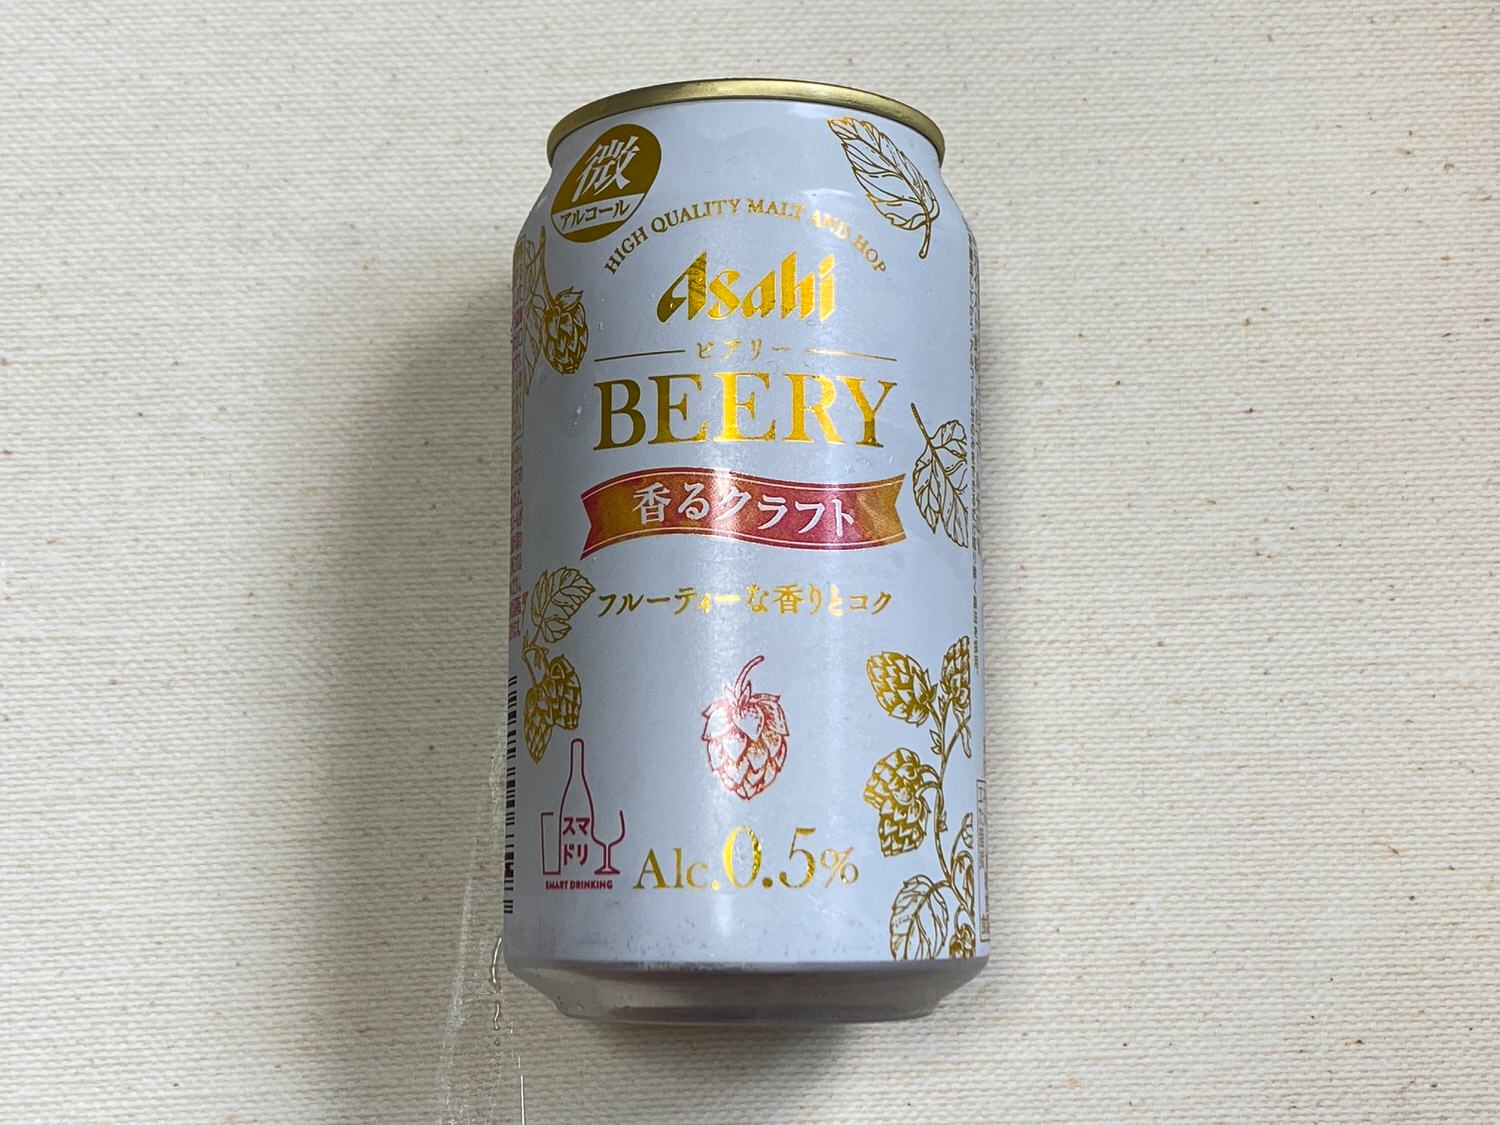 Asahi beery 2 03 04